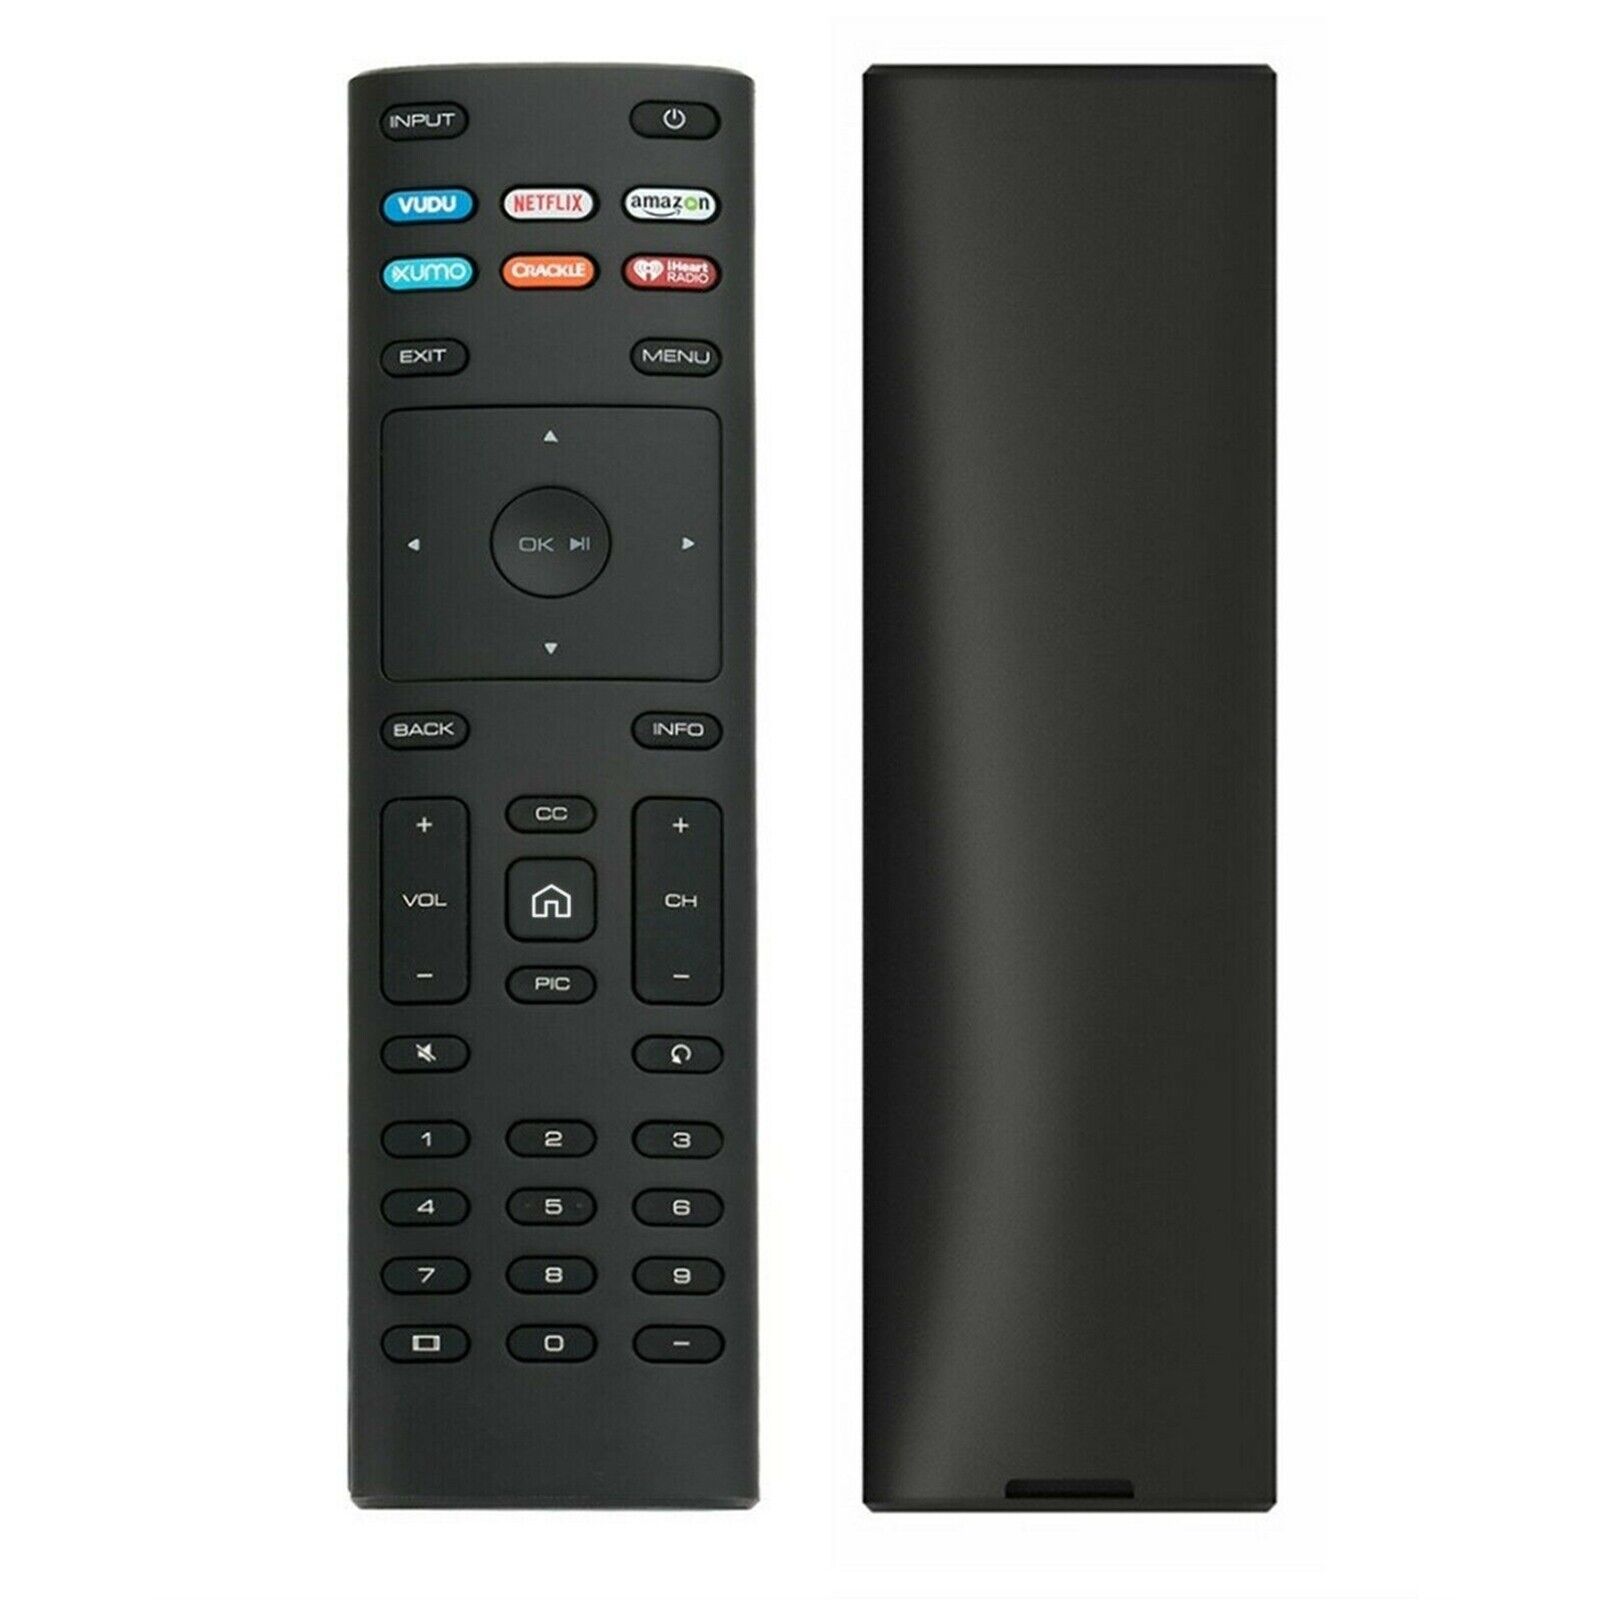 New XRT136 for Vizio Smart TV Remote Control w Vudu Amazon iheart Netflix 6 Keys